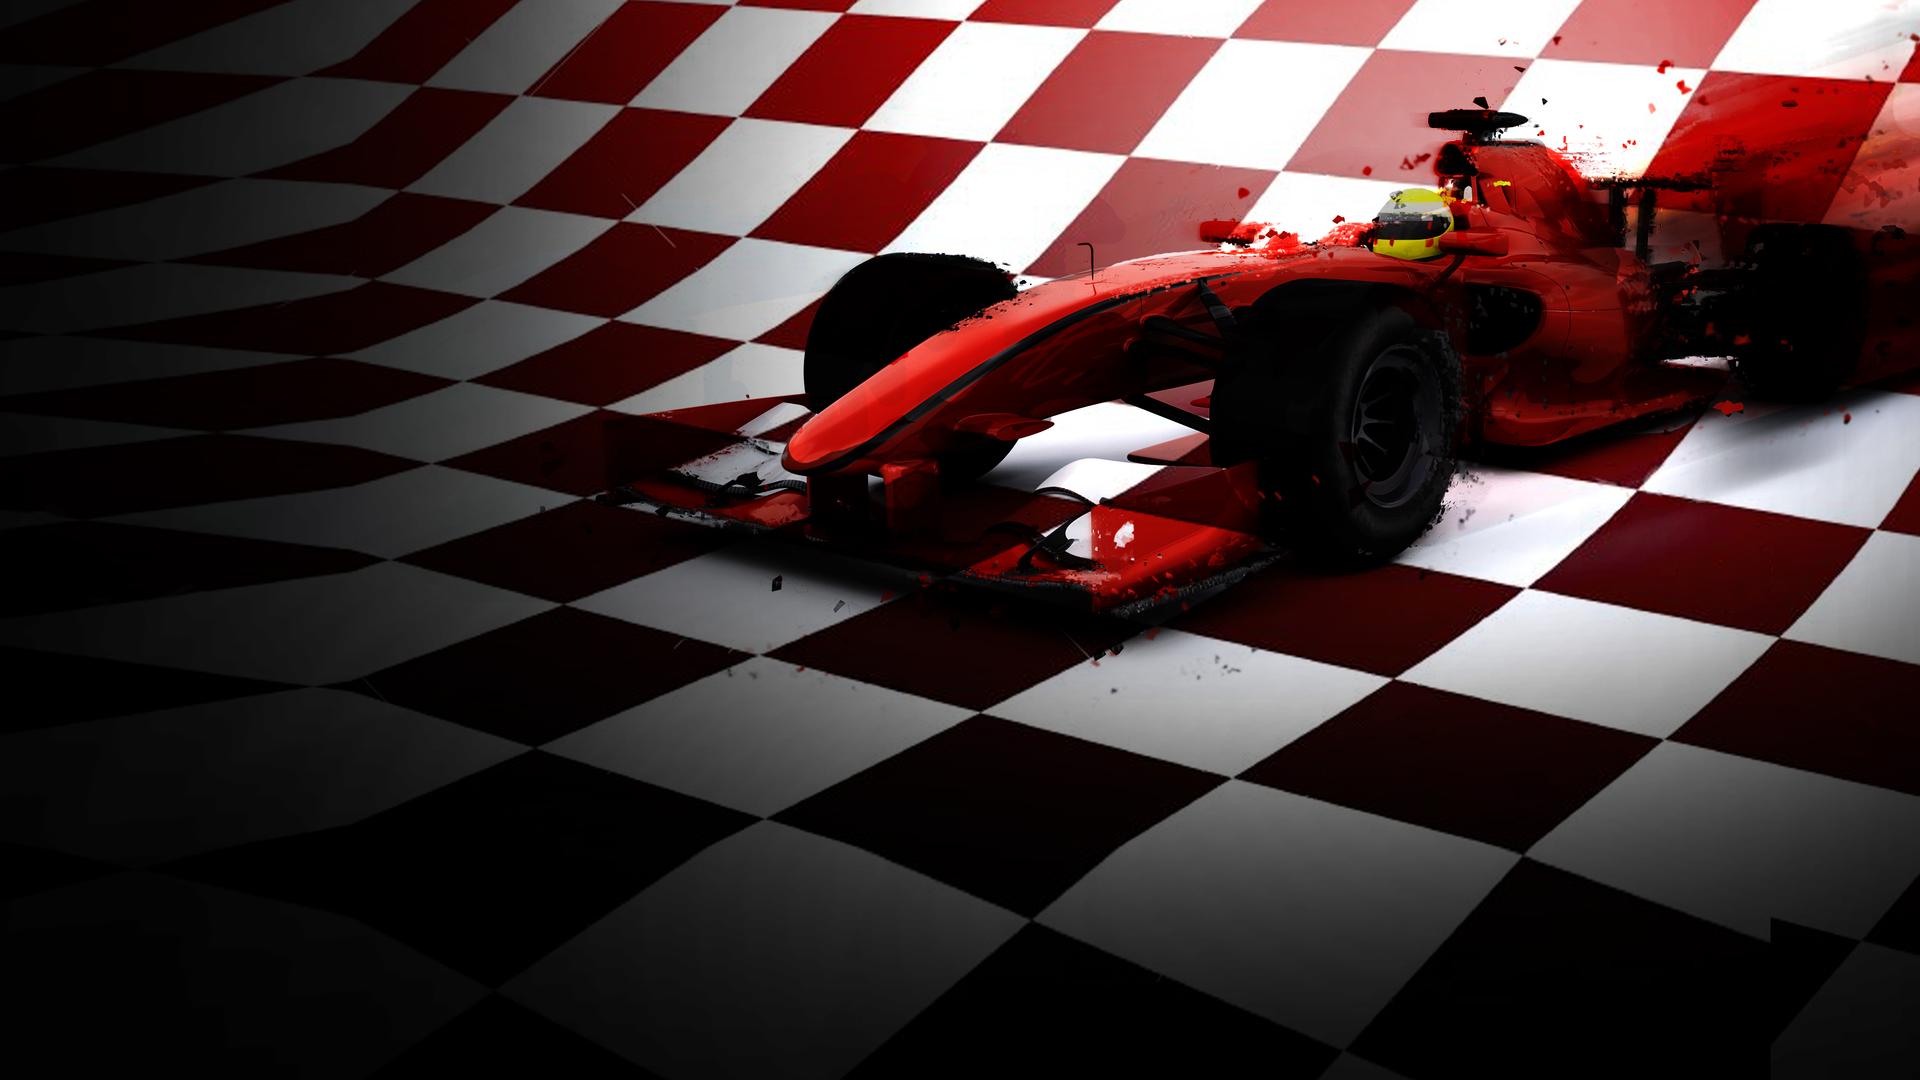 Formula 1: Racing Science